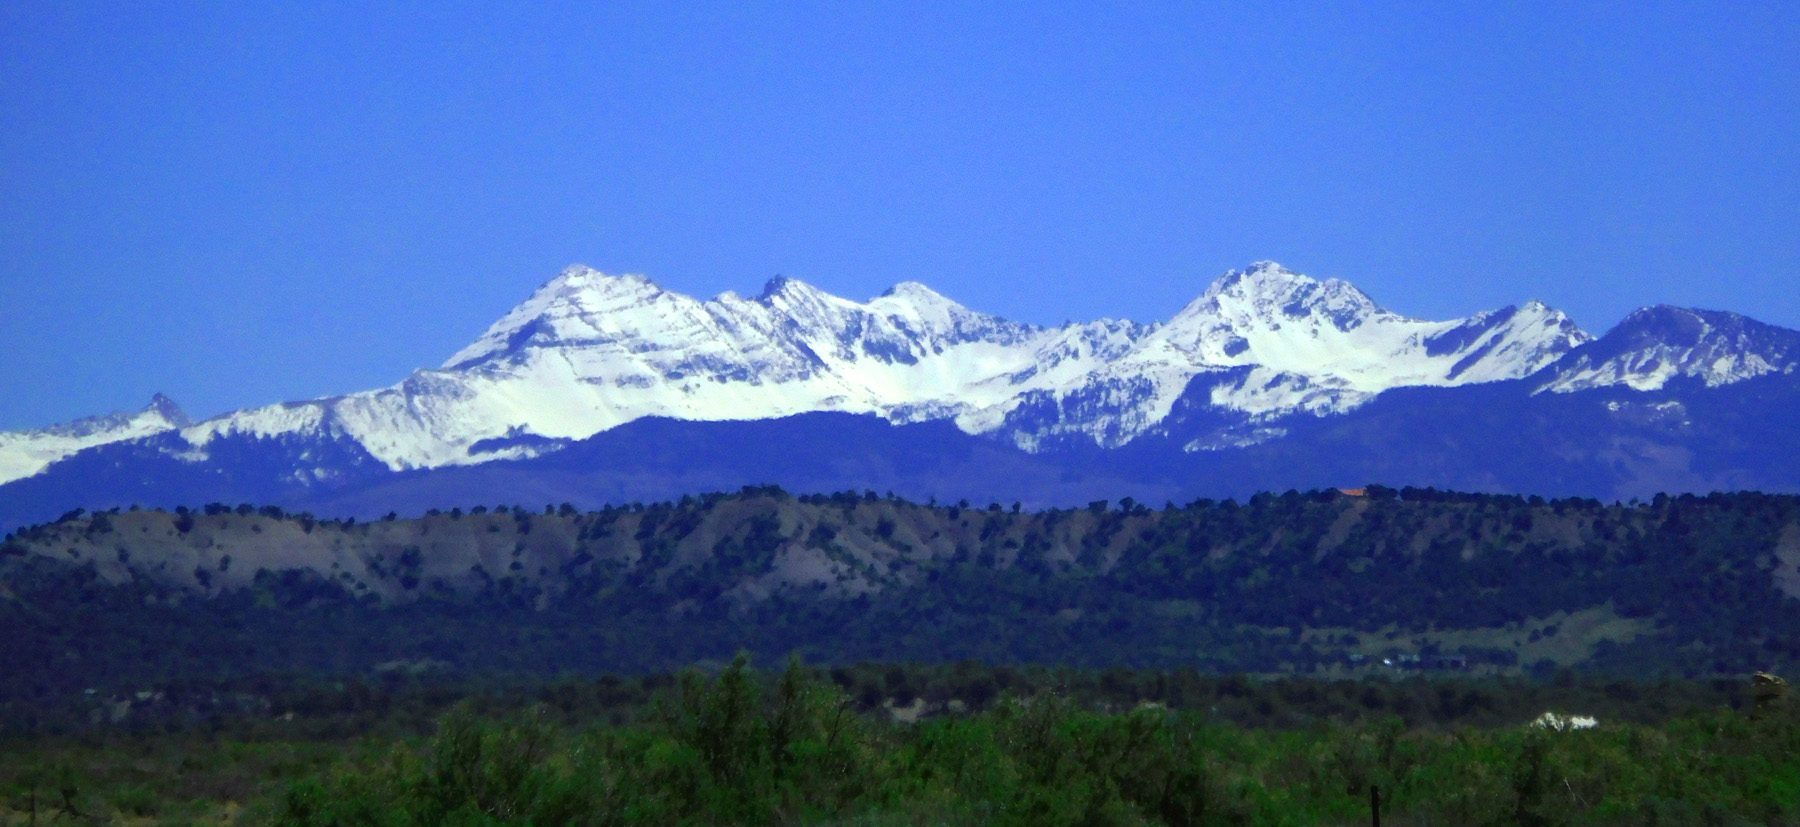 Hesperus Peak